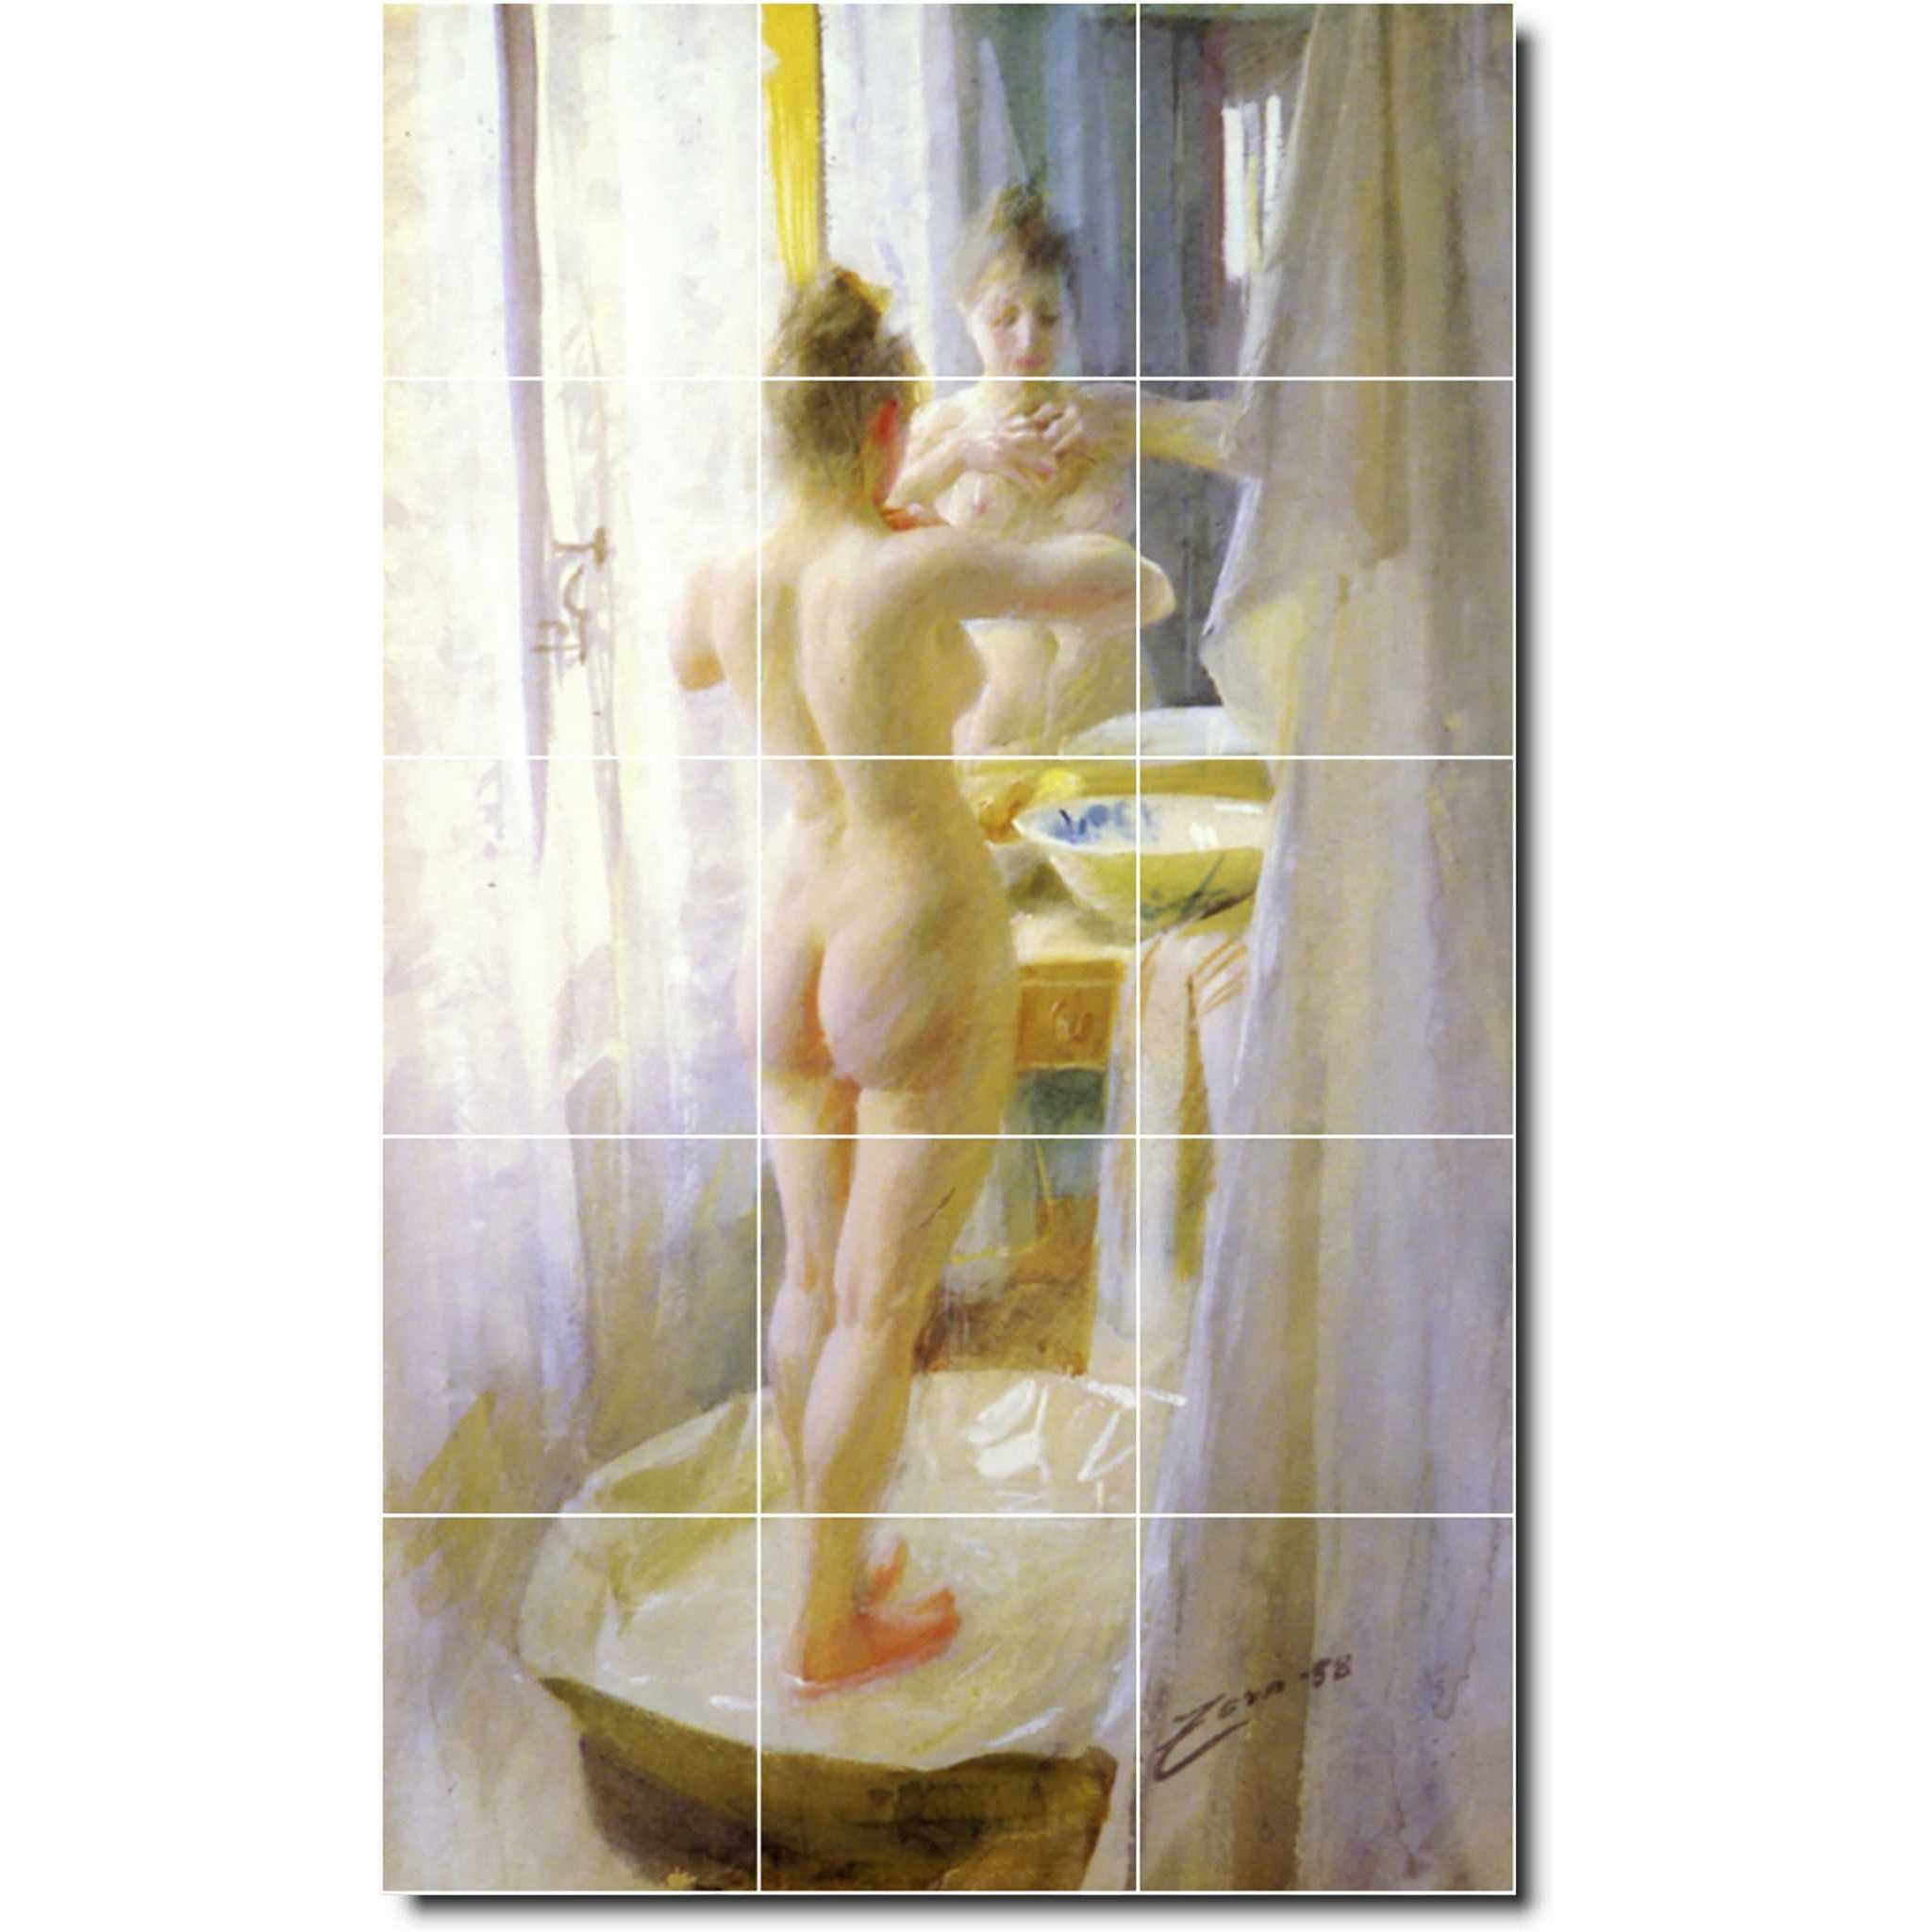 anders zorn nude painting ceramic tile mural p10039